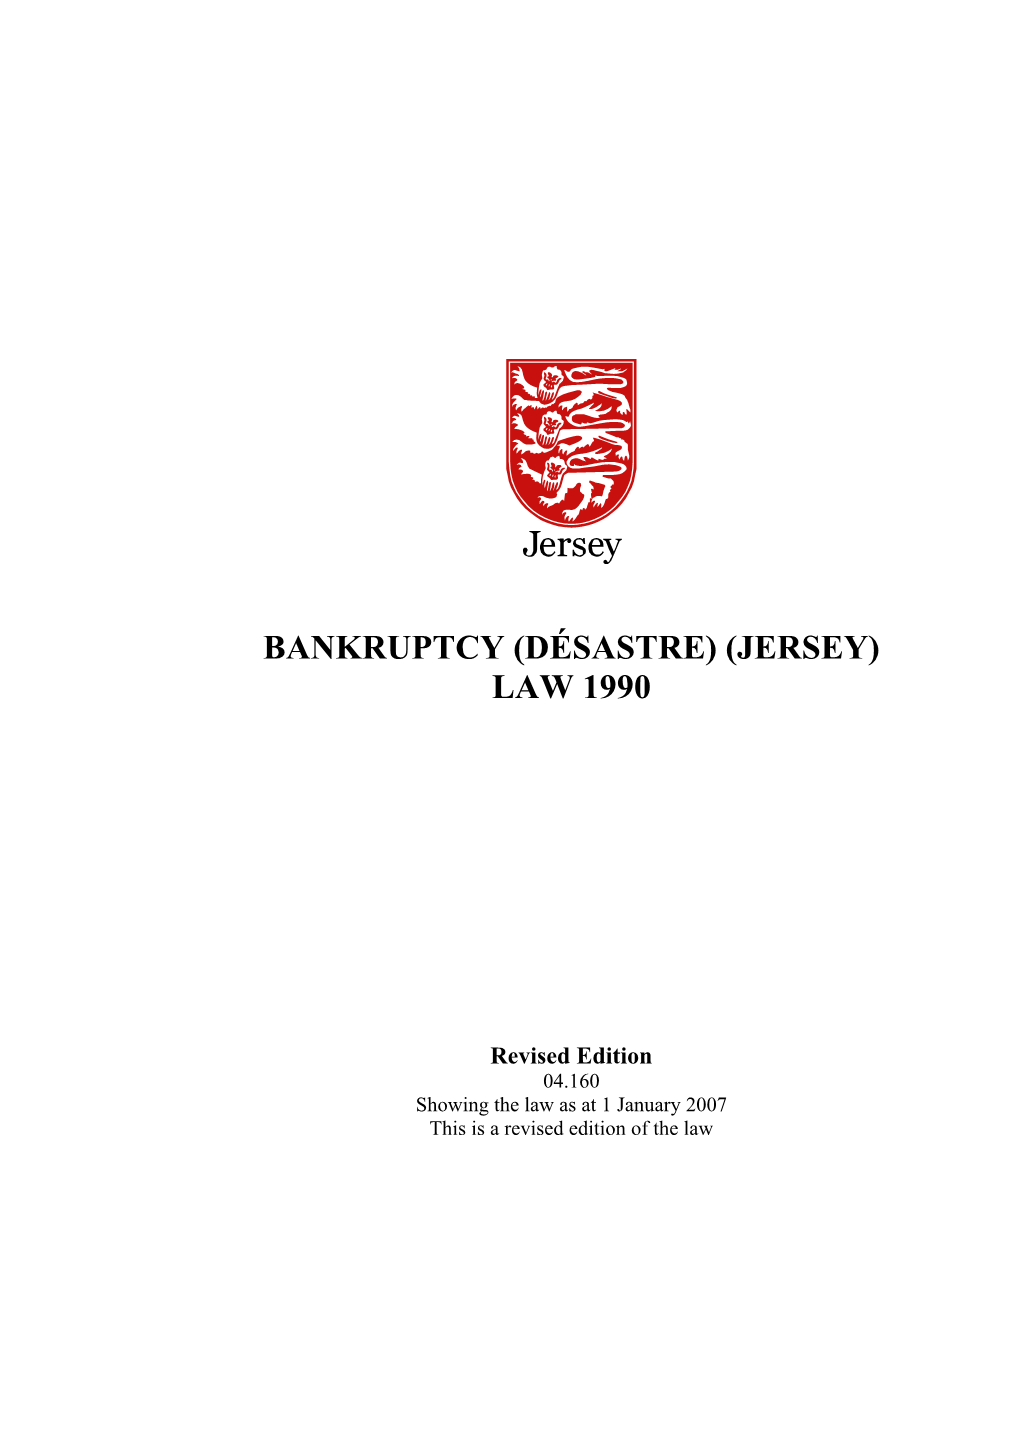 (Jersey) Law 1990